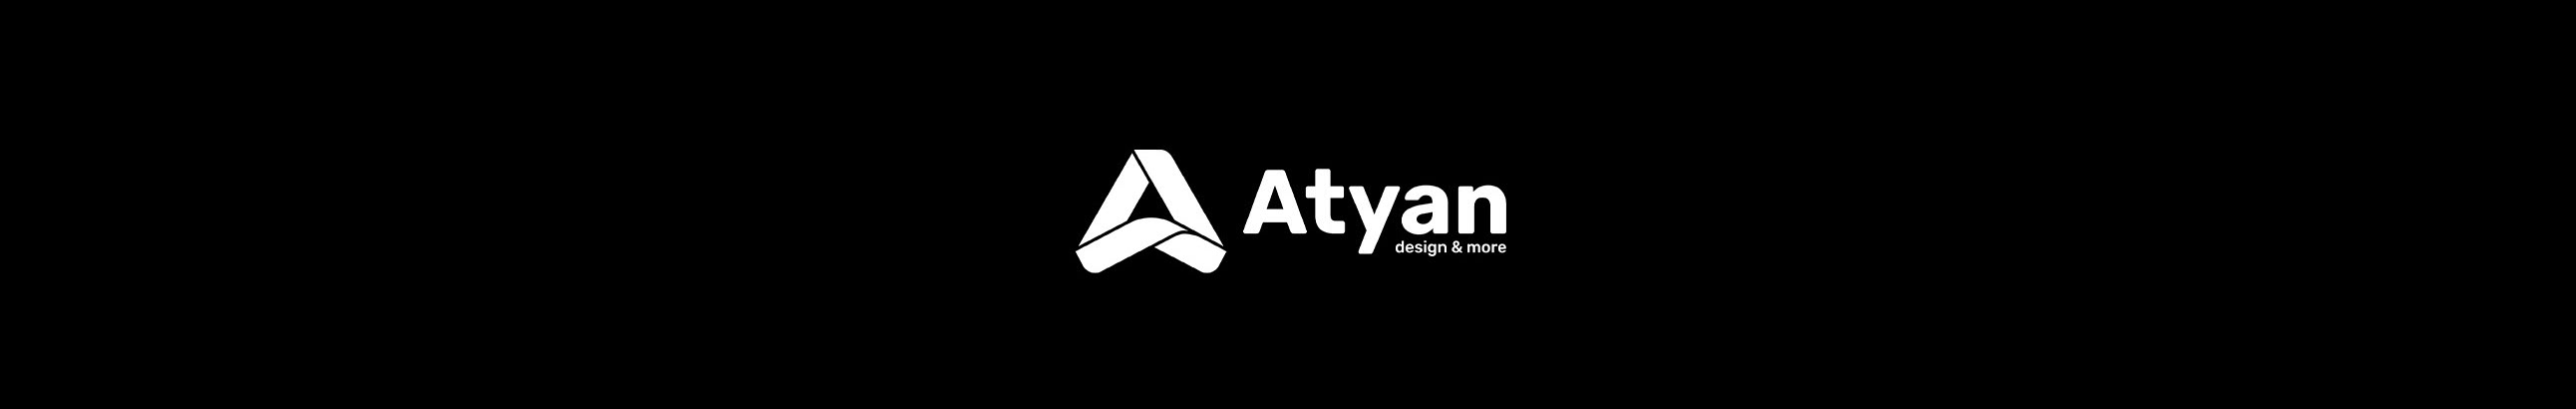 Aram Atyan's profile banner